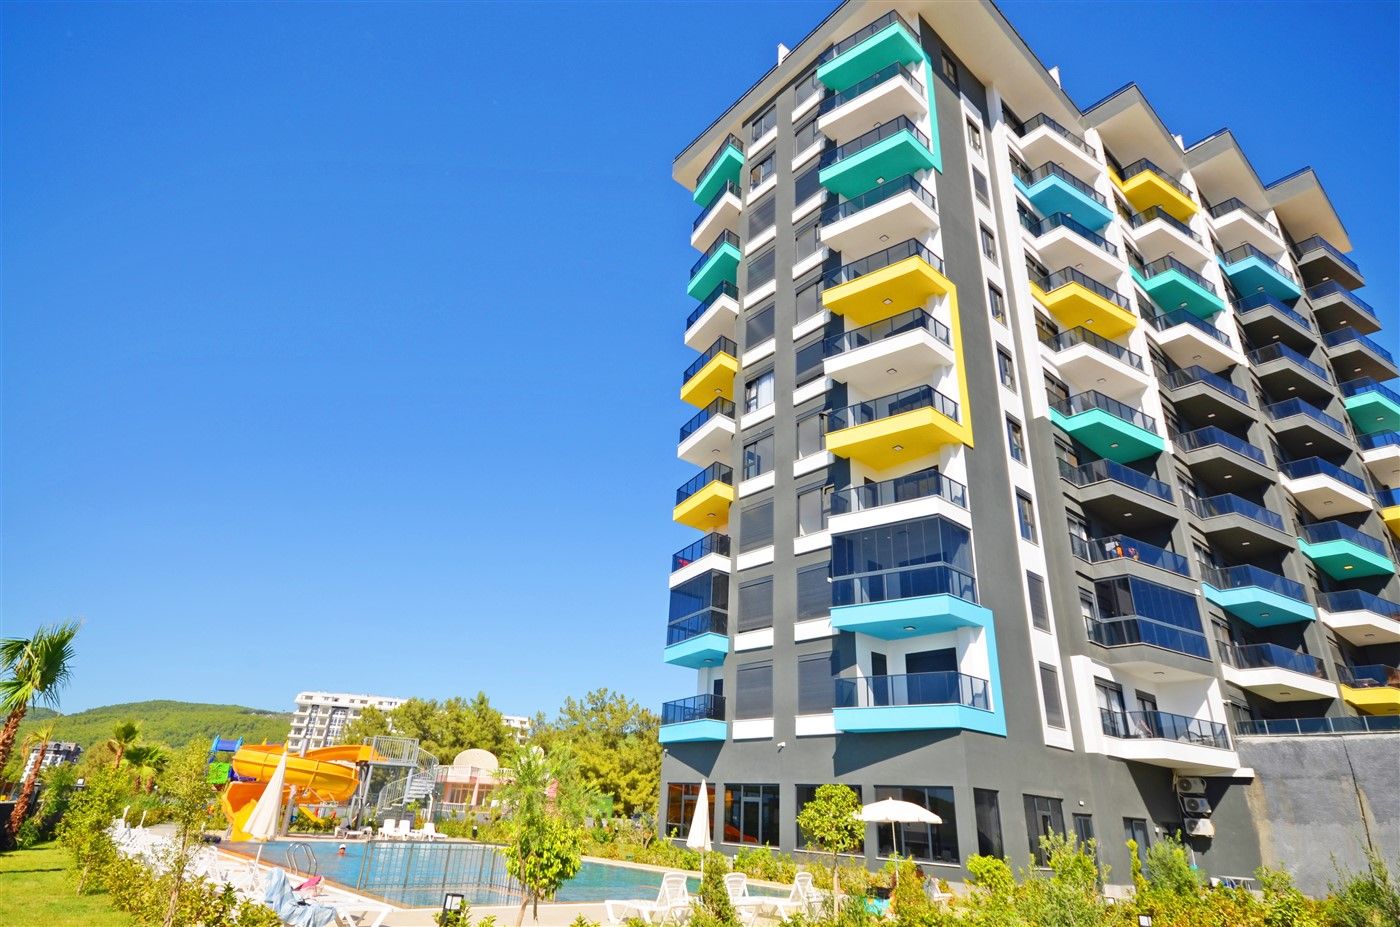 One-bedroom apartment in new complex - picturesque Avsallar district